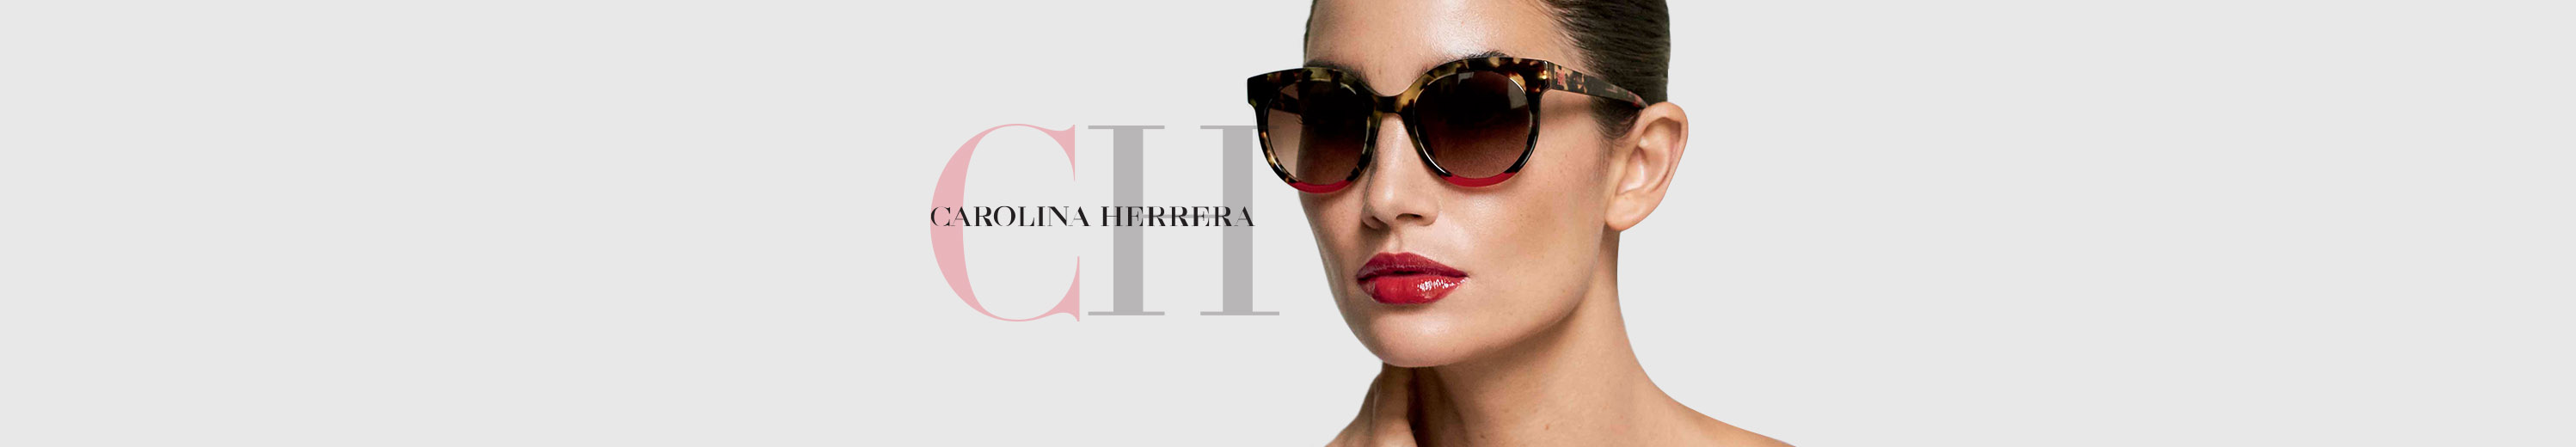 Carolina Herrera Glasses and Eyewear